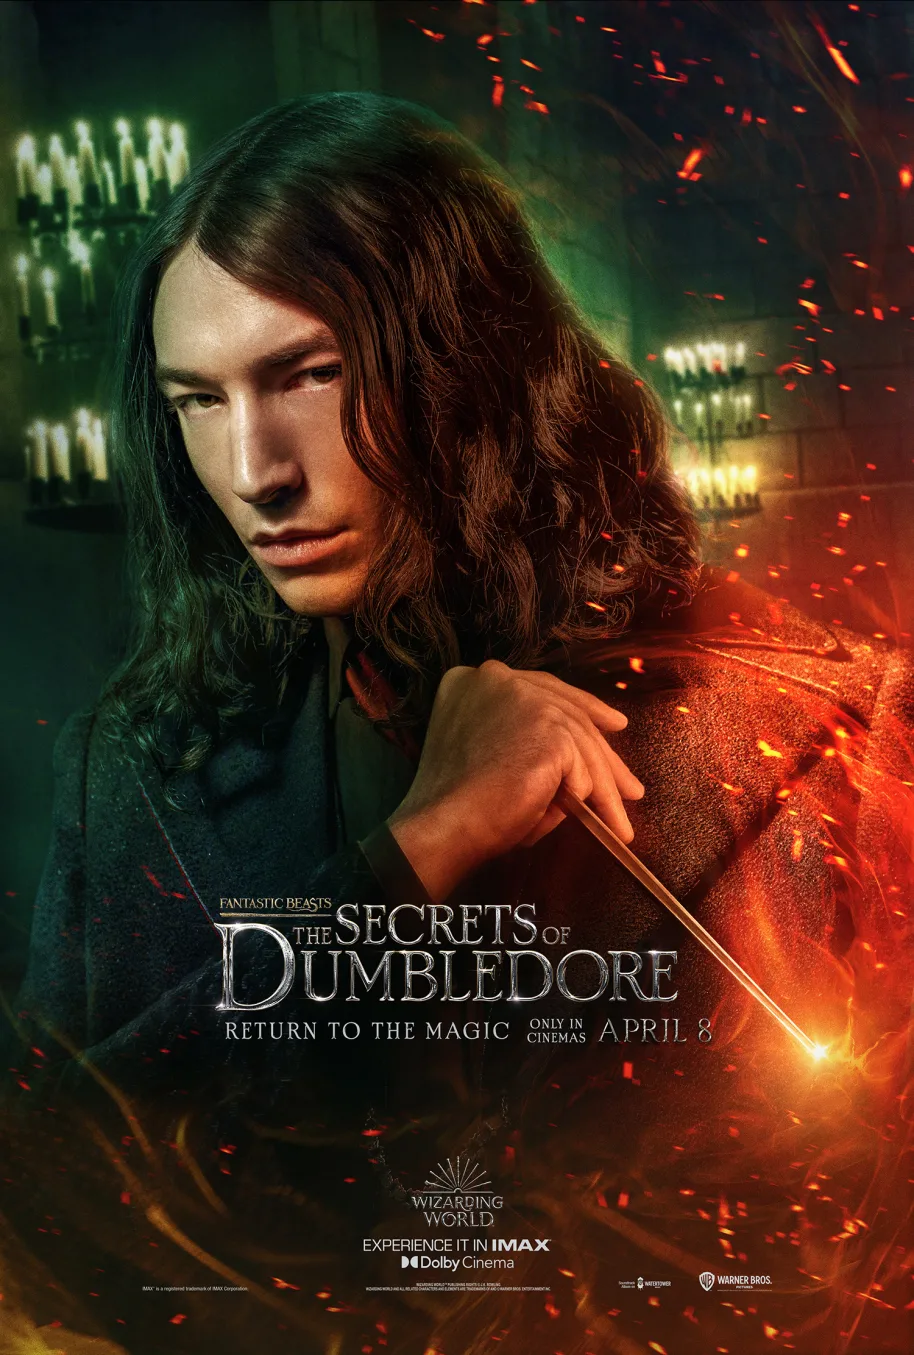 “Fantastic Beasts: The Secrets of Dumbledore”: Credence Barebone character poster